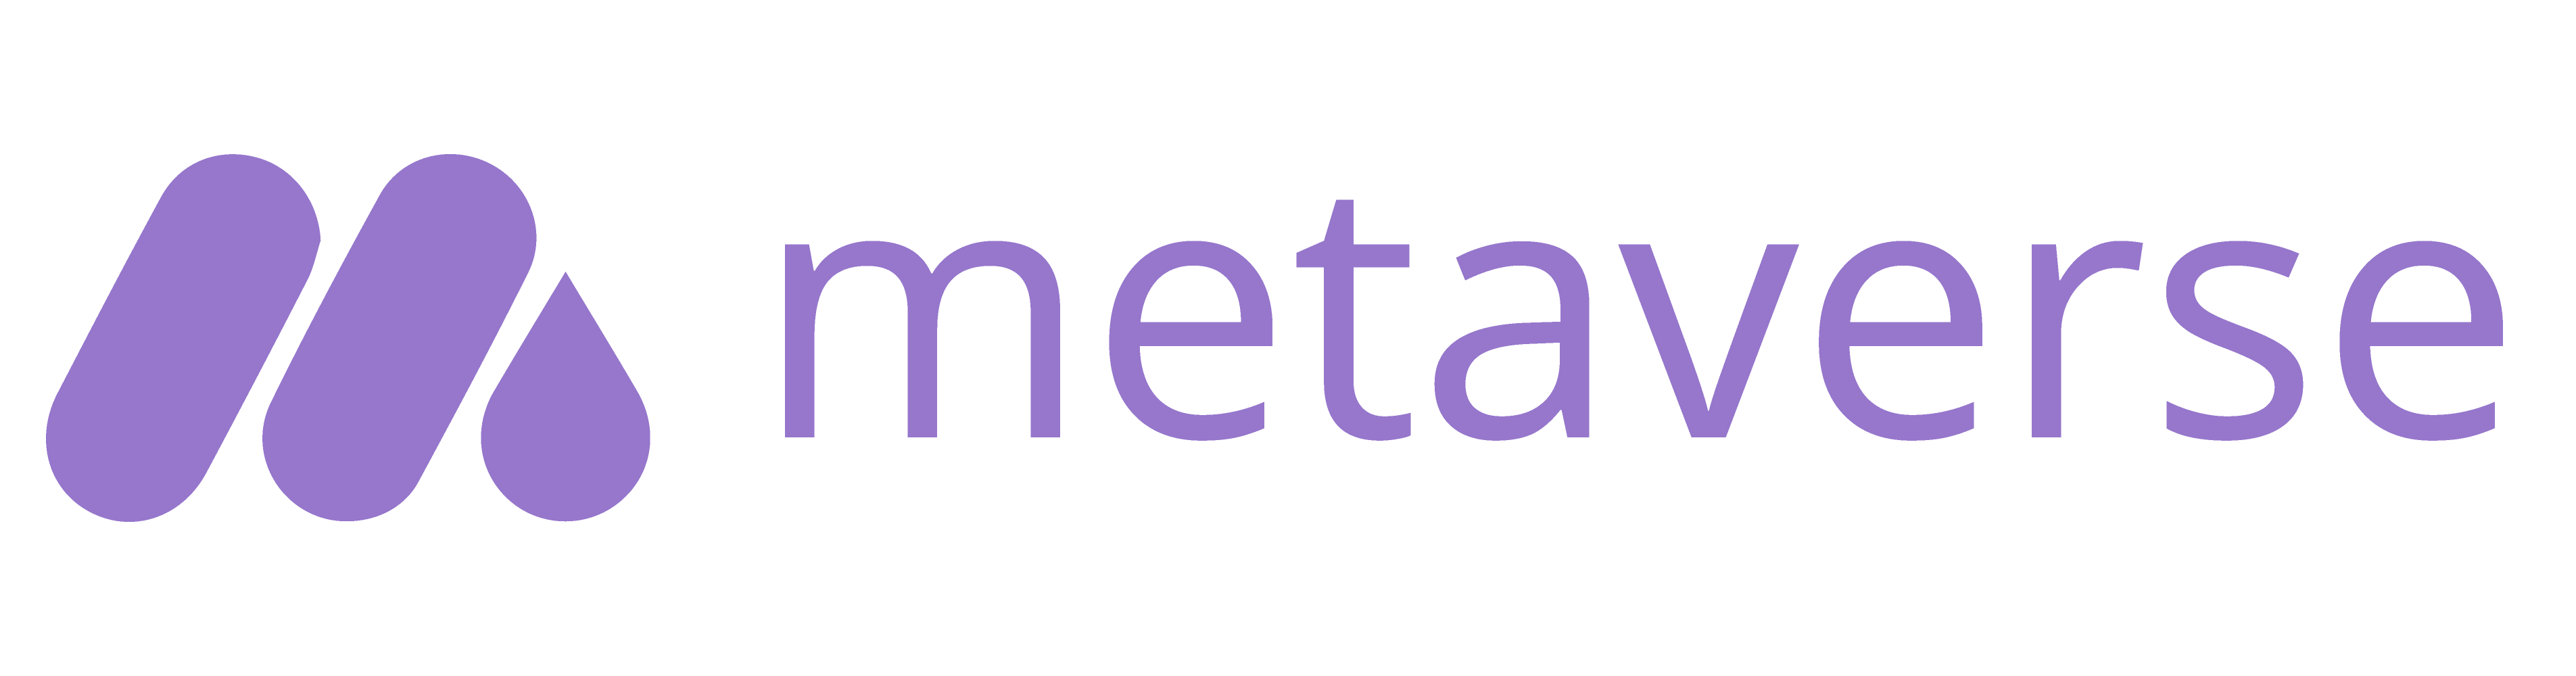 Metaverse (gometa.io)